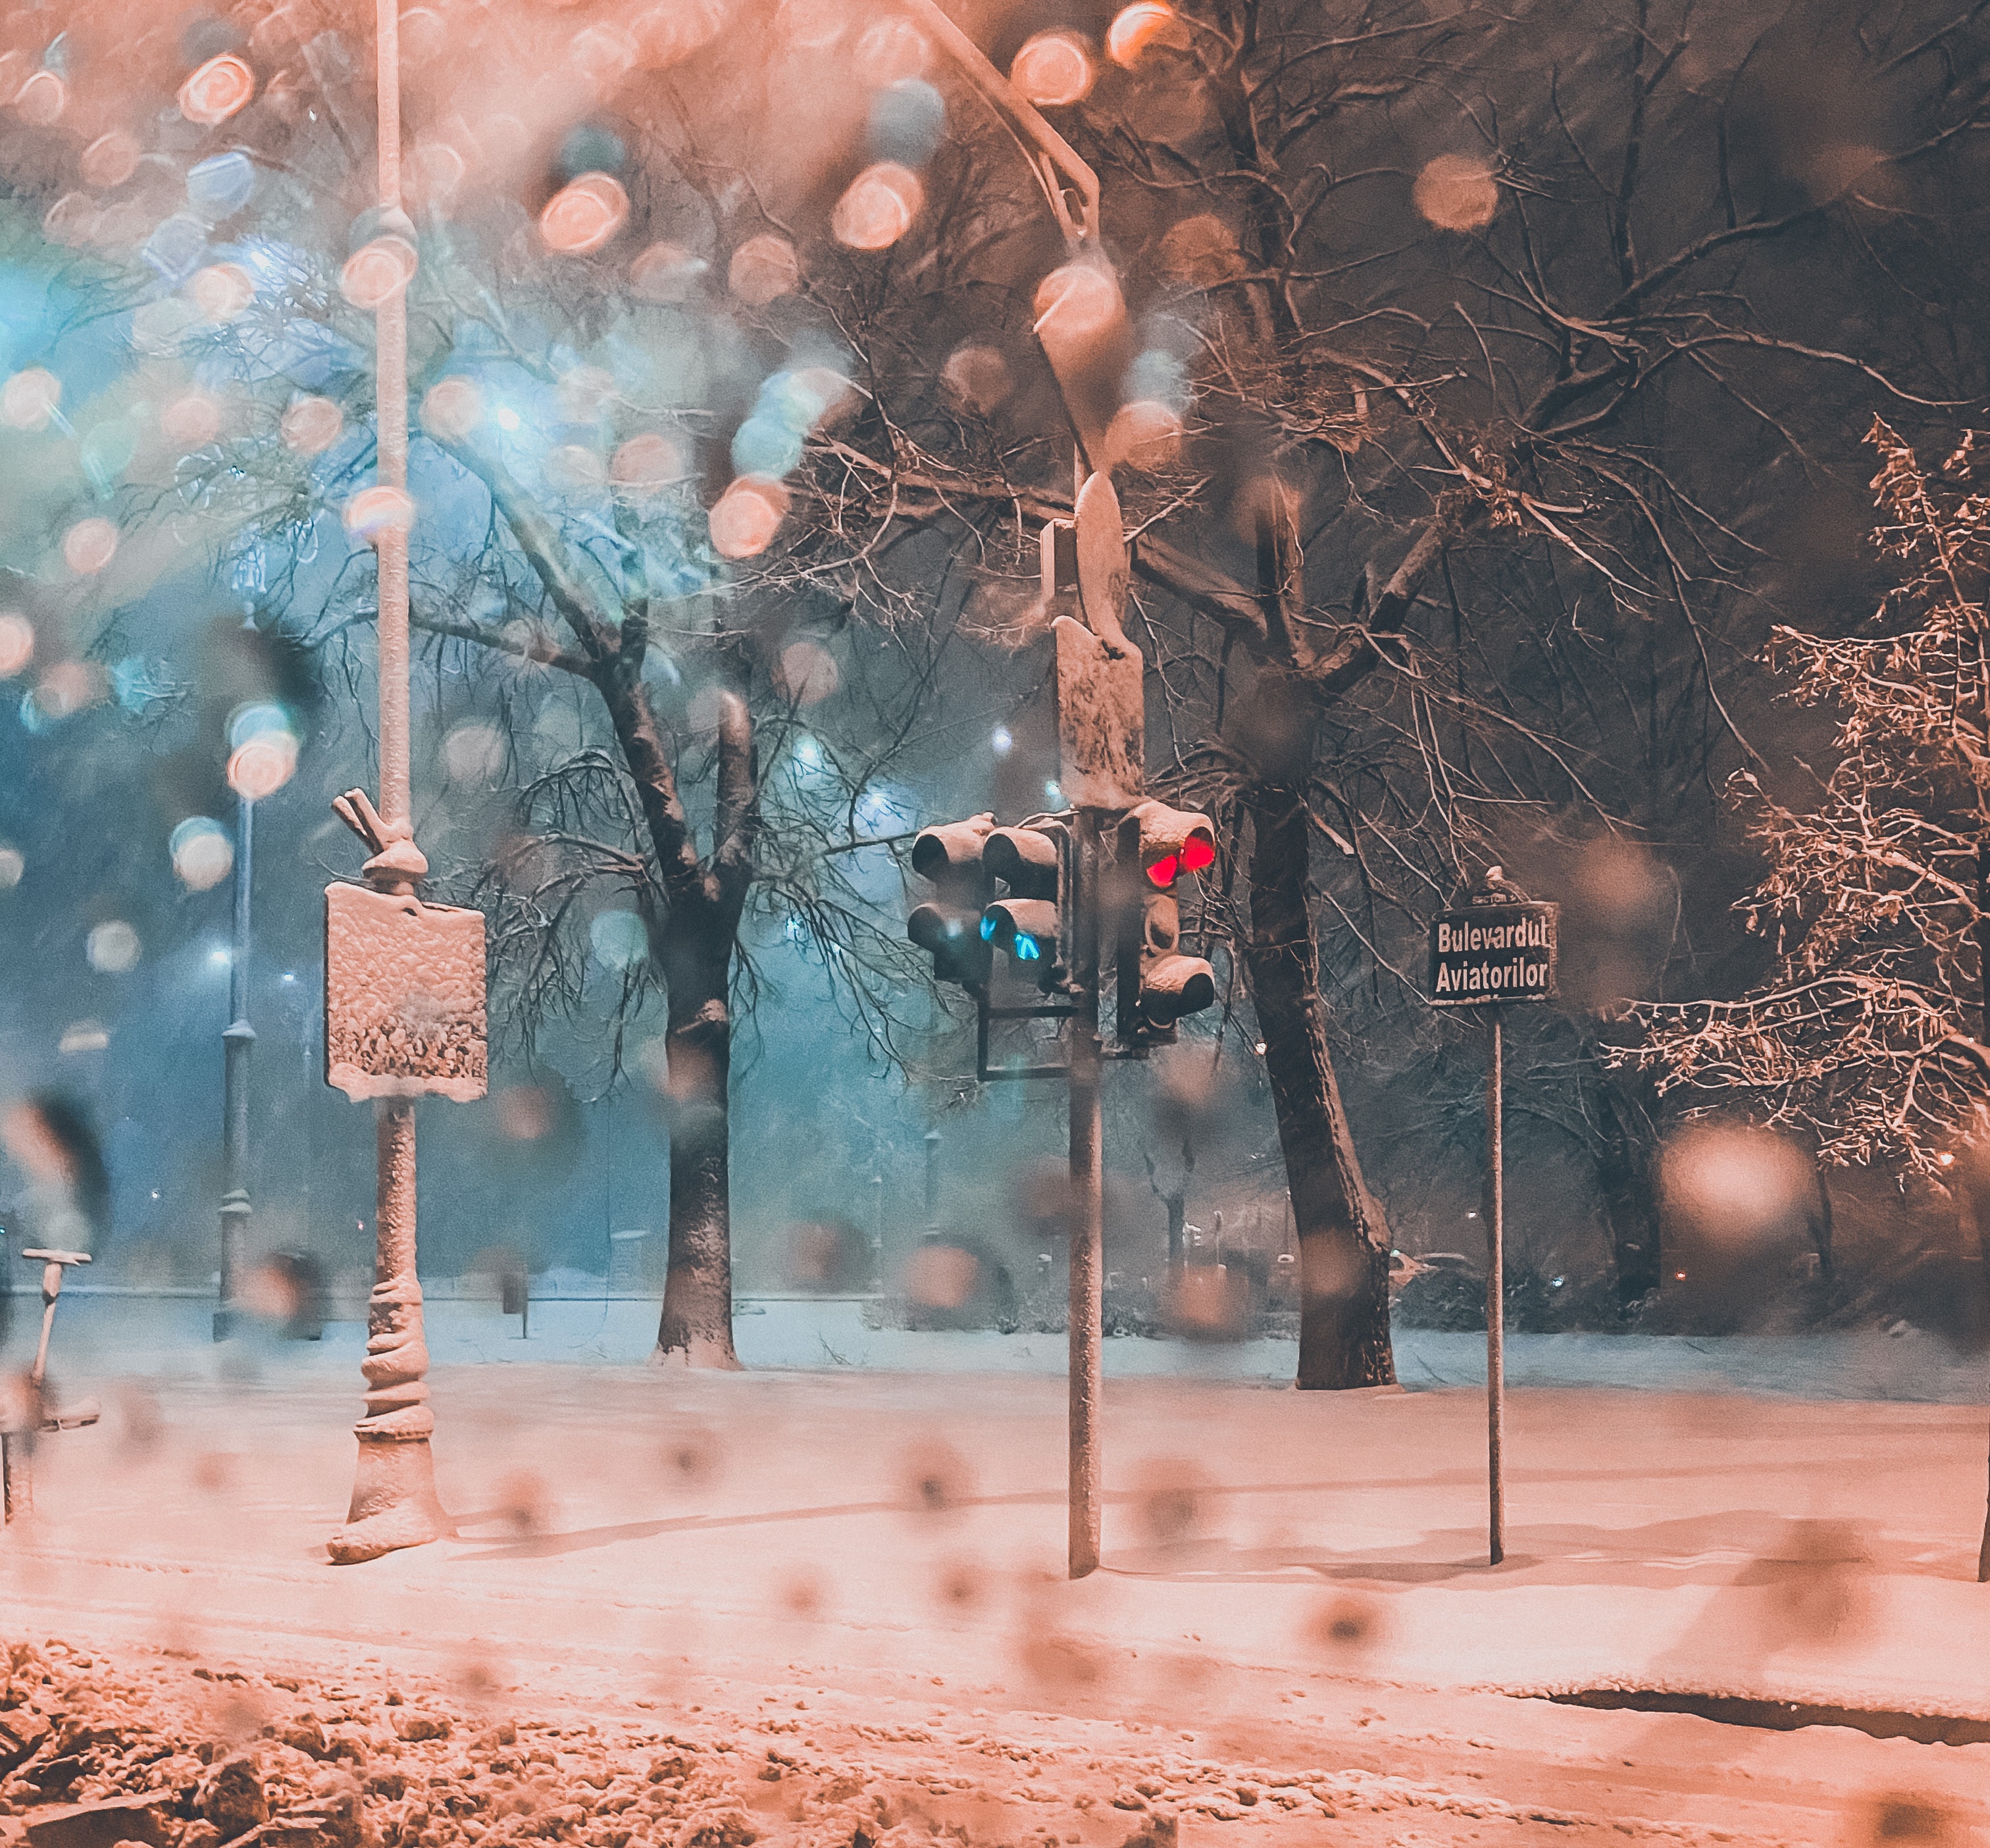 vertical wallpaper traffic light, winter, snow, miscellanea, miscellaneous, street, snowstorm